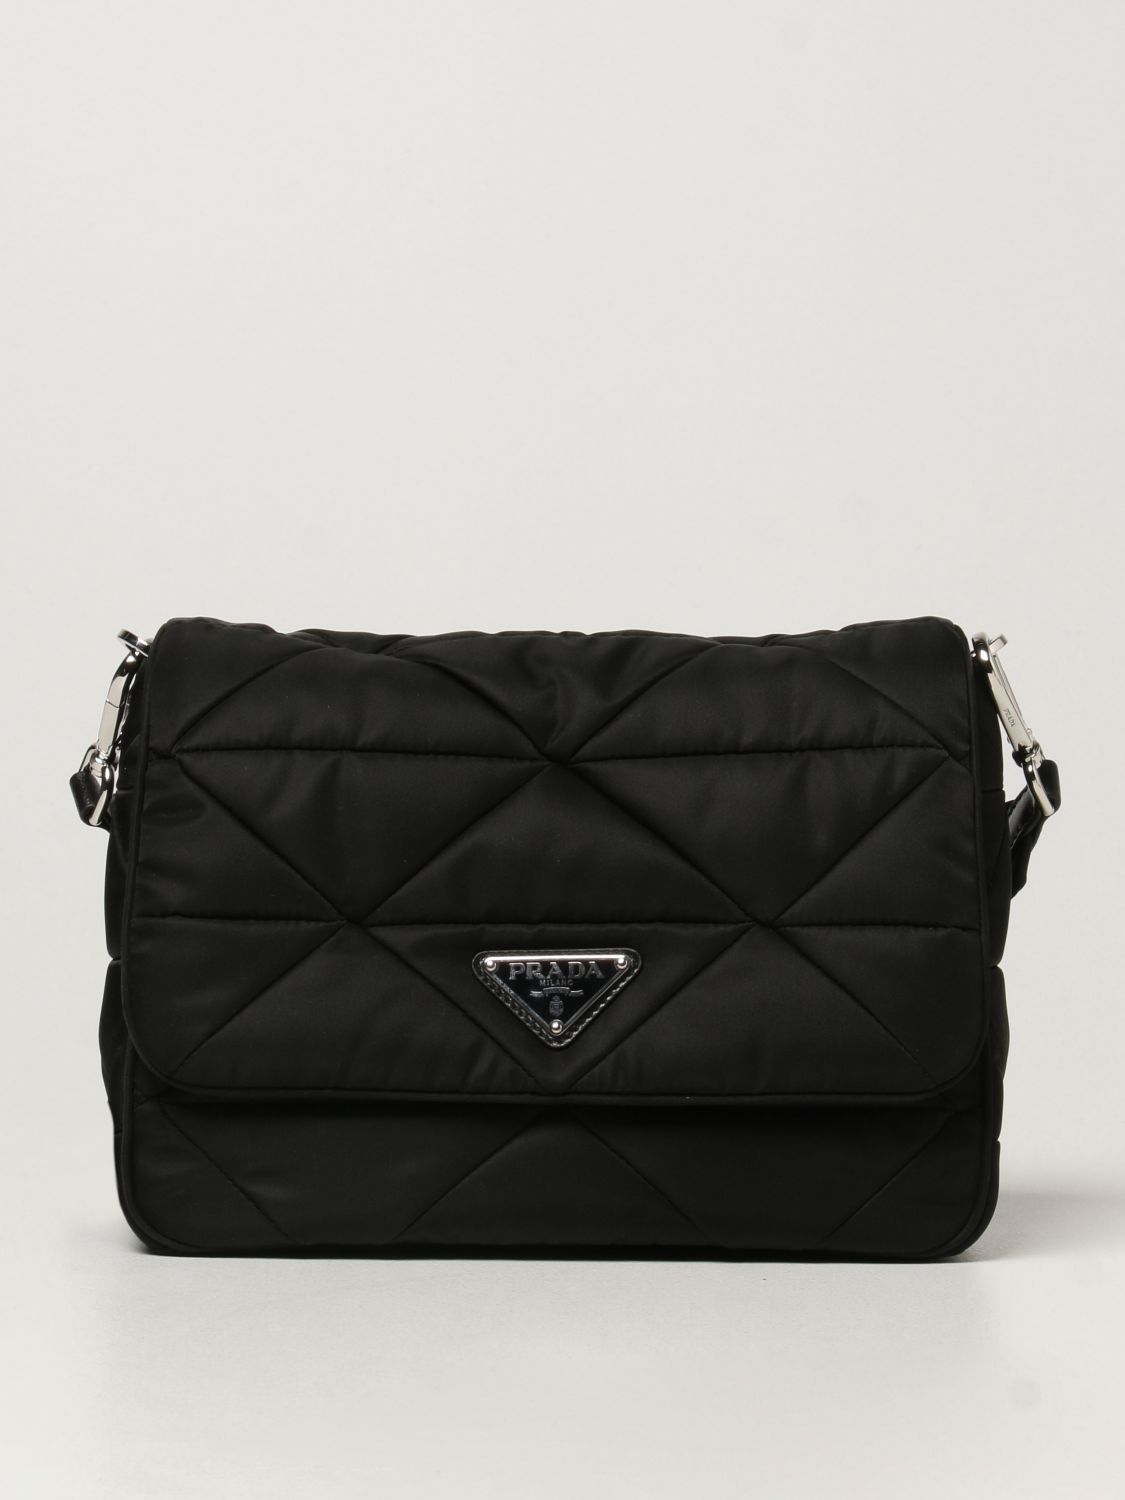 PRADA: nylon patch bag - Black | Prada crossbody bags 1BD290 RDJN online on  